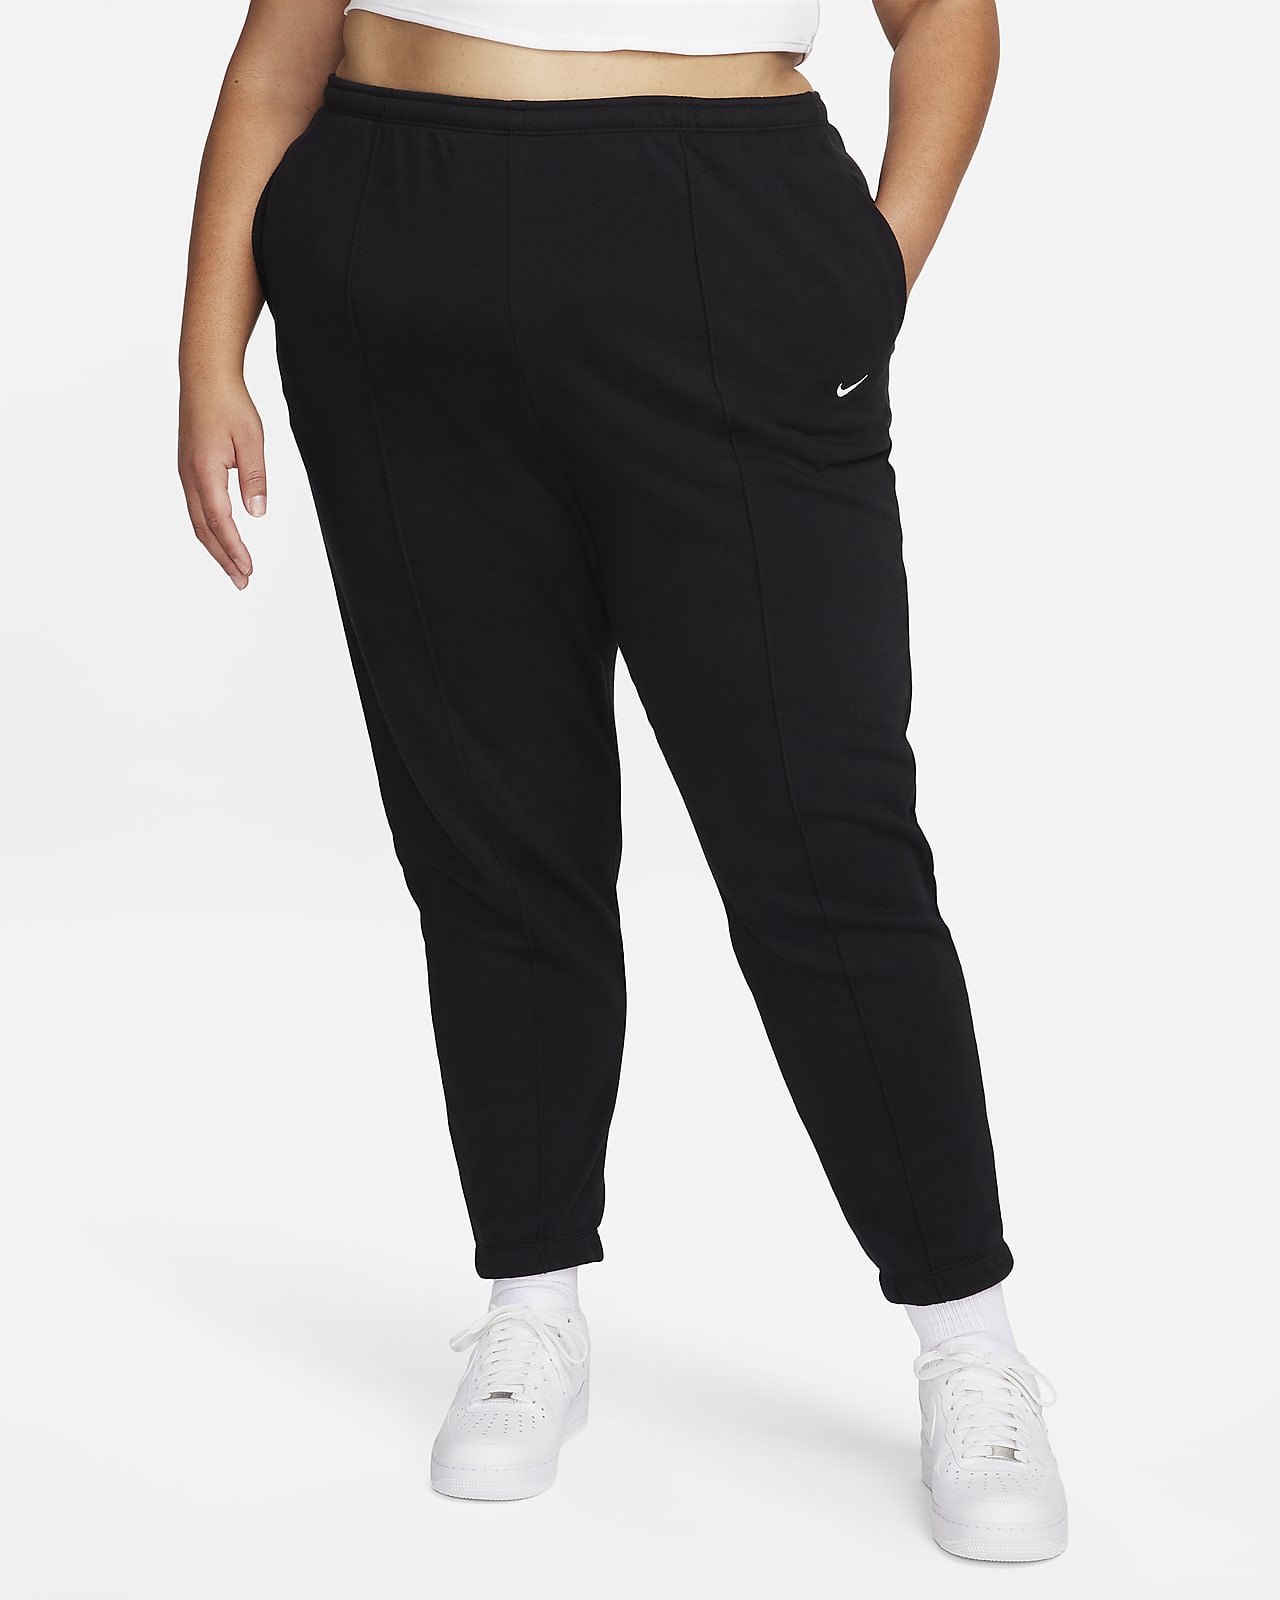 Pants de entrenamiento de French Terry slim de tiro alto para mujer (talla grande) Nike Sportswear Chill Terry